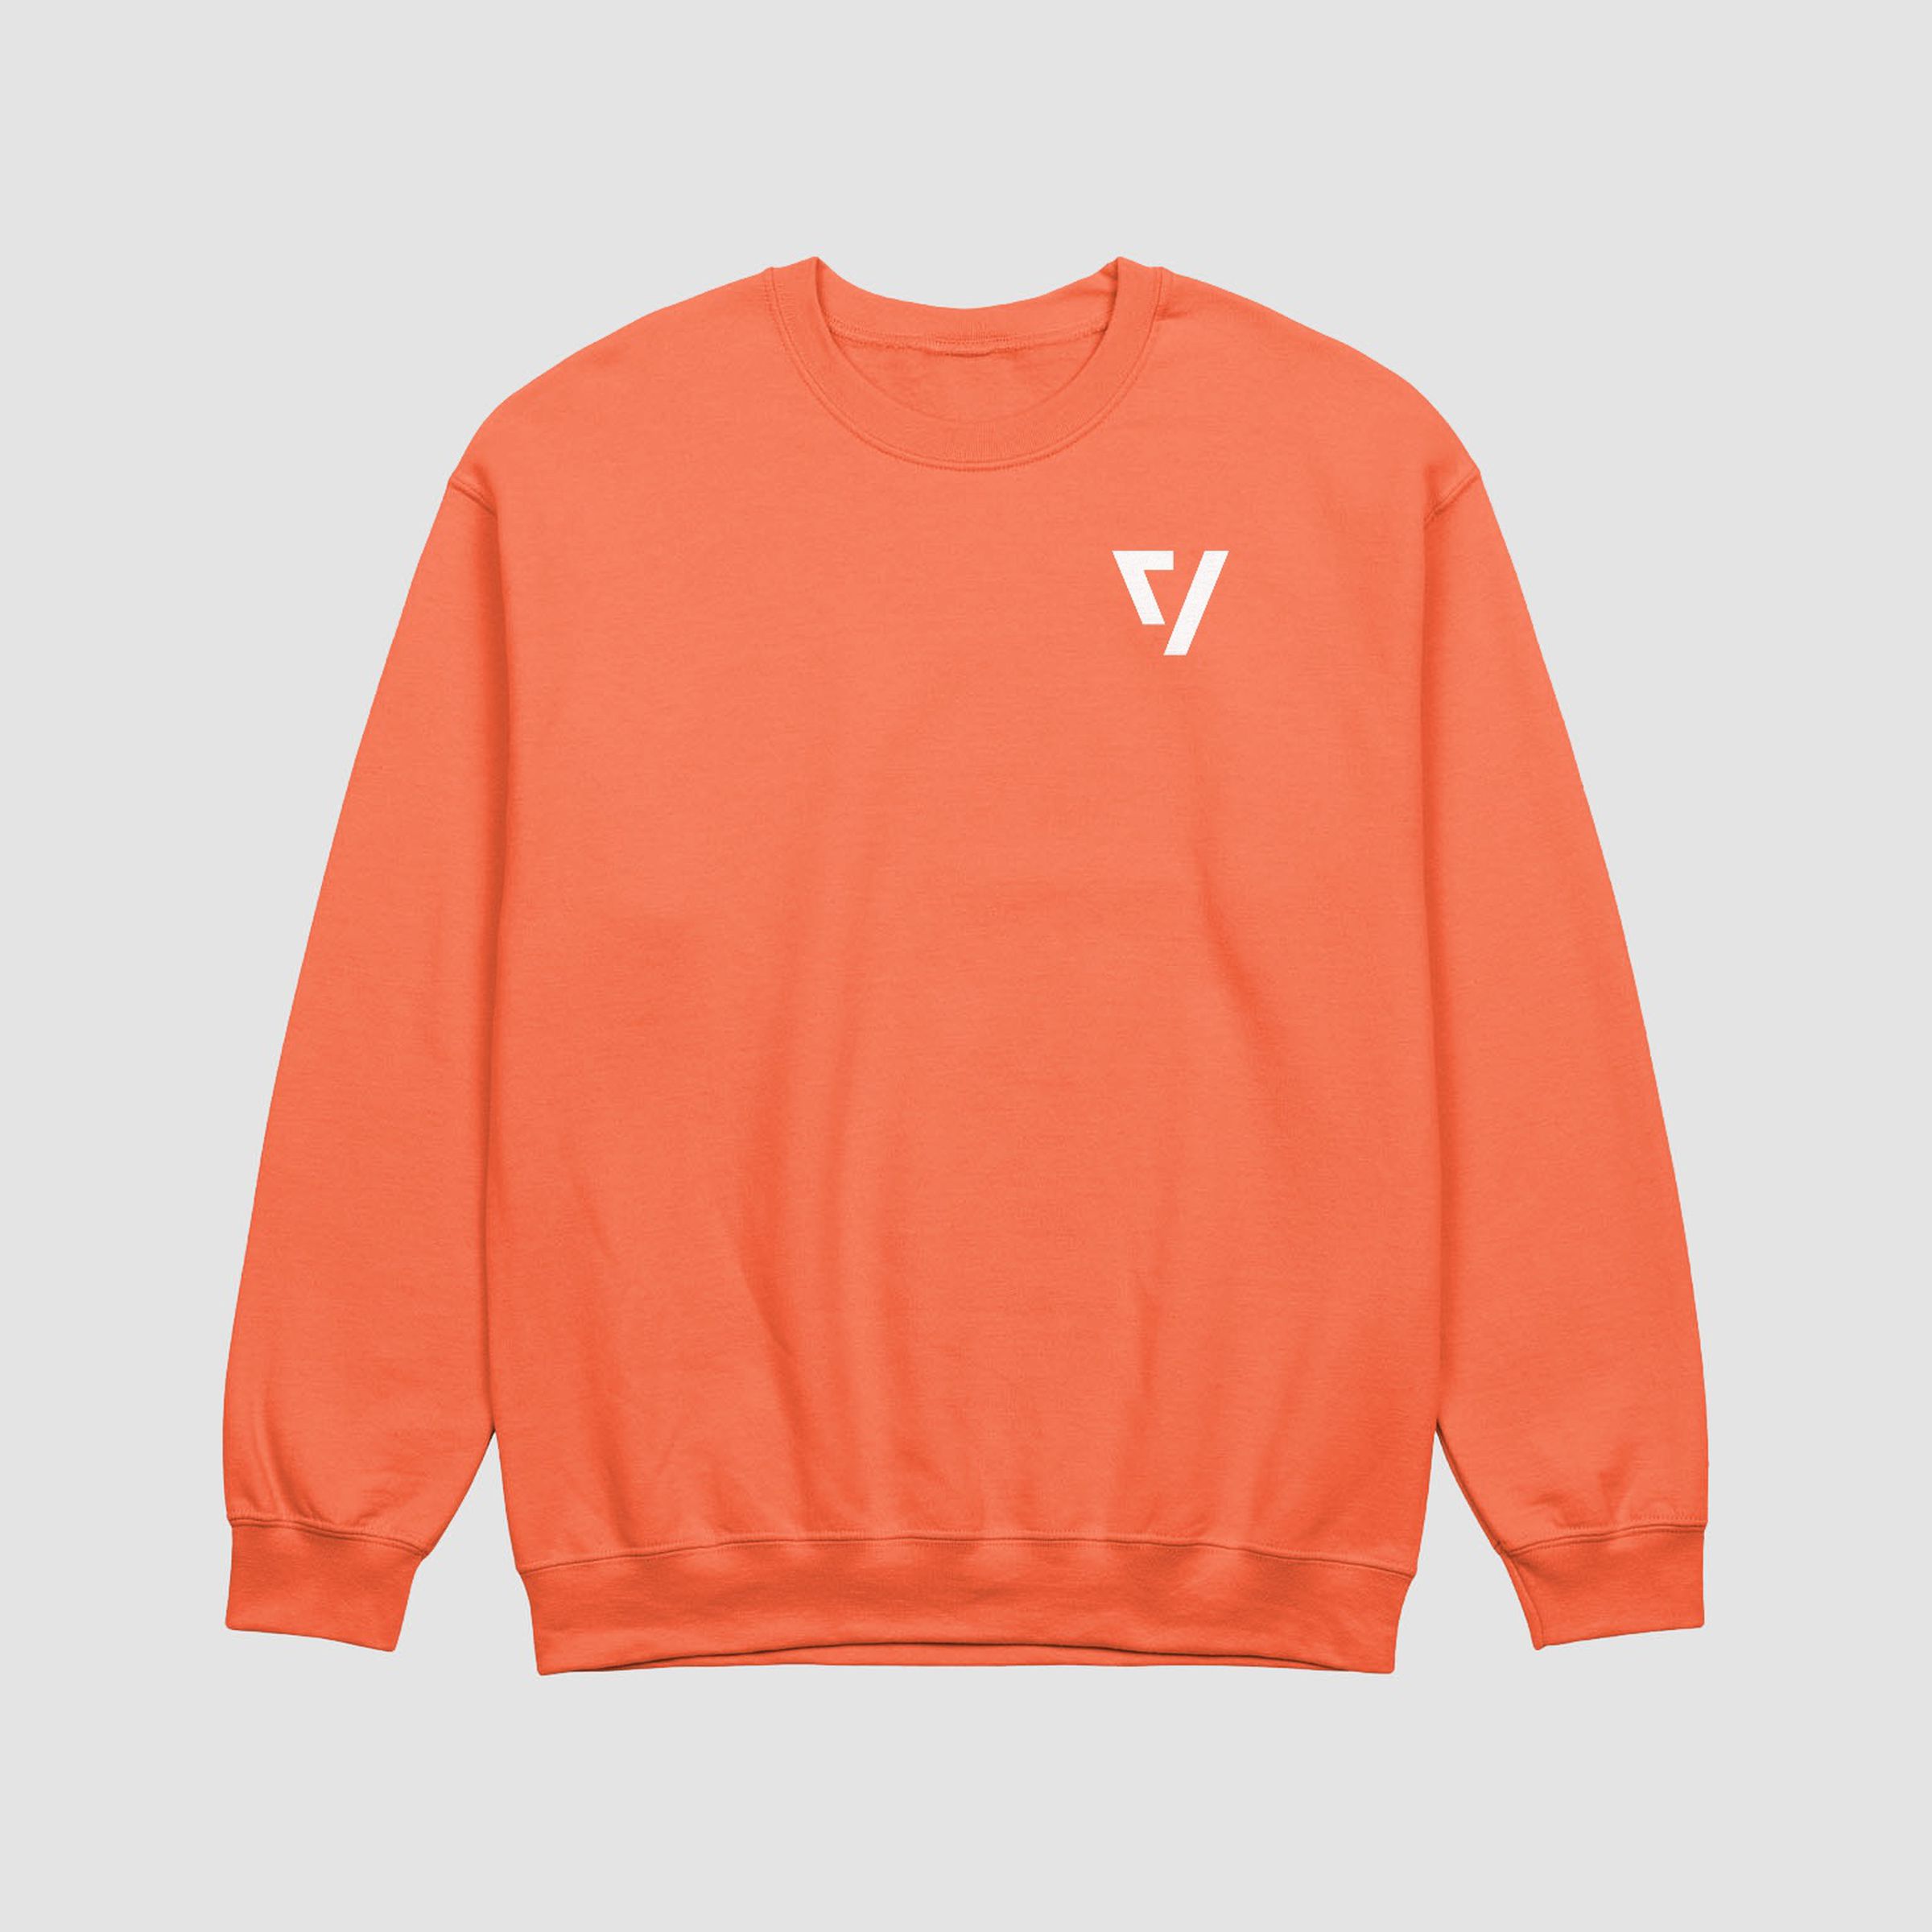 Orange crewneck sweatshirt with The Verge logo